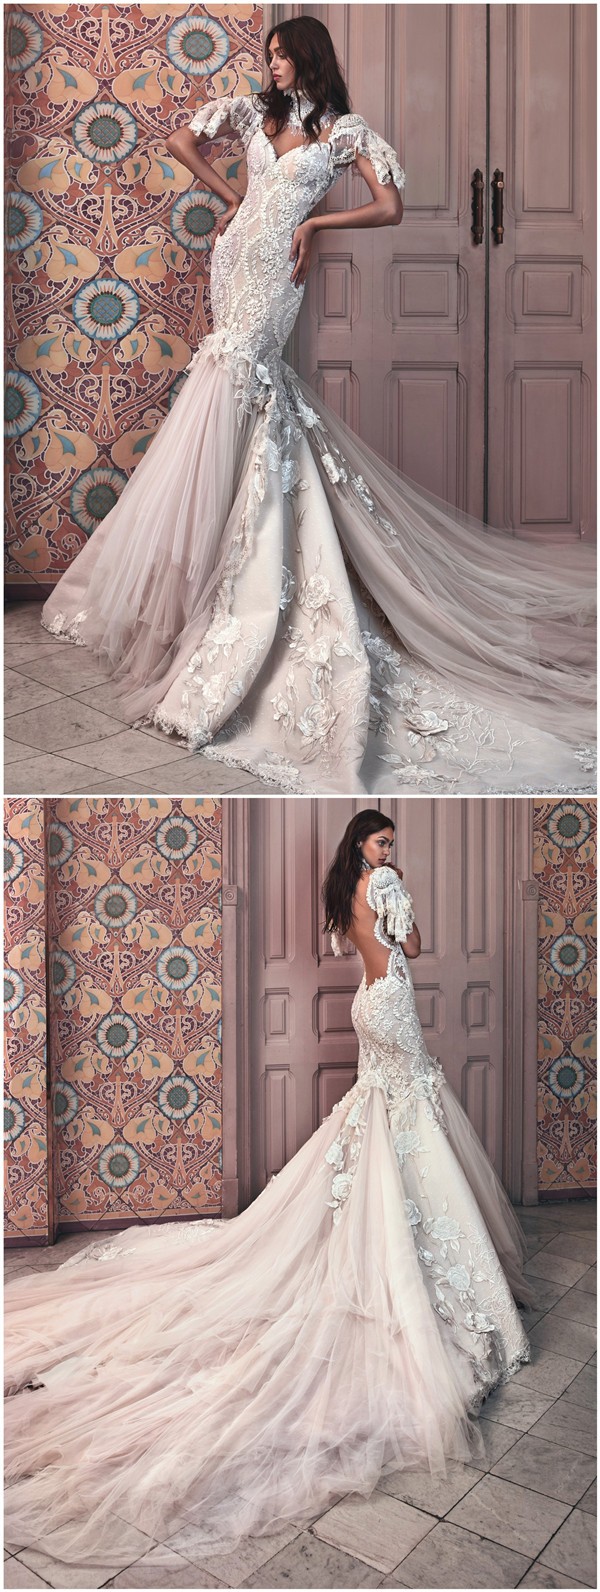 Galia Lahav Wedding Dresses 2018 Victorian Affinity Collection - Ms. Genesis